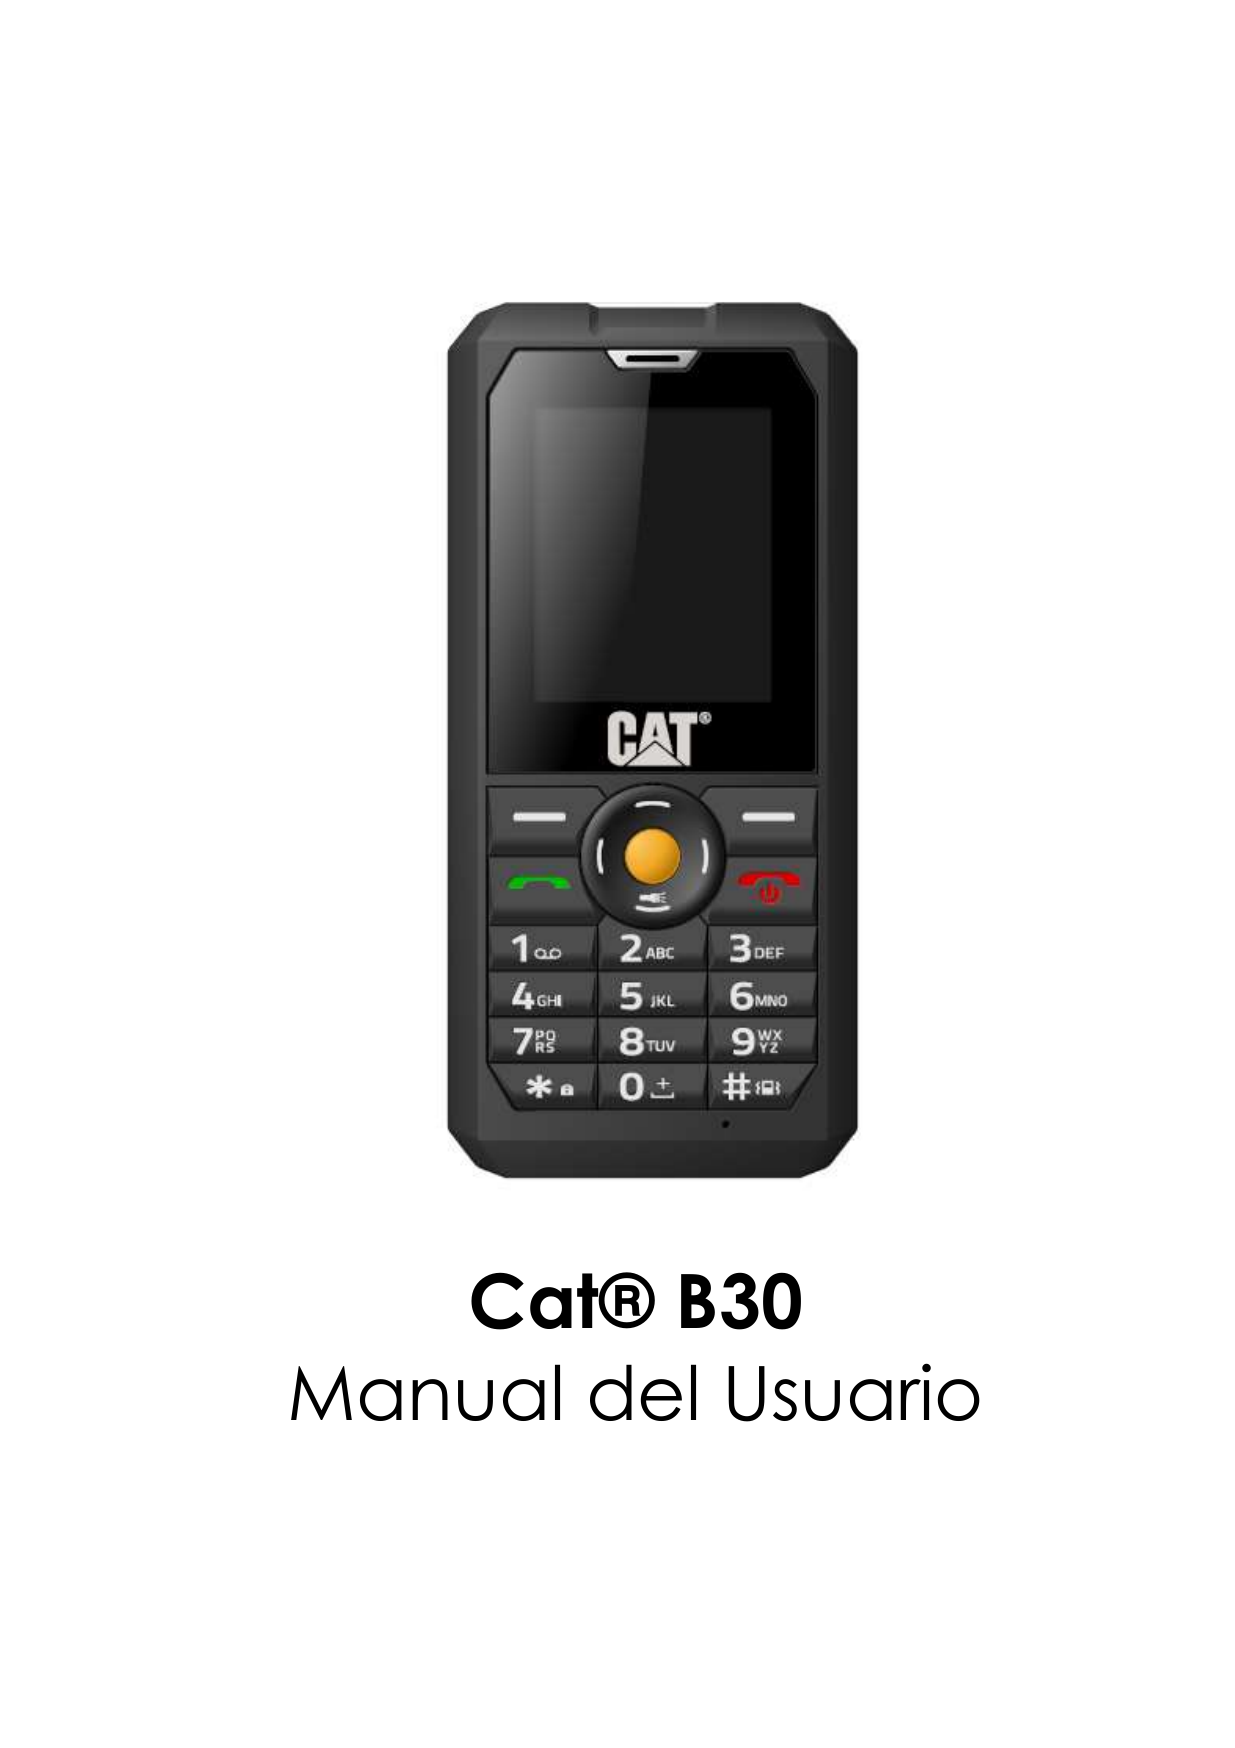 Cat® B30Manual del Usuario